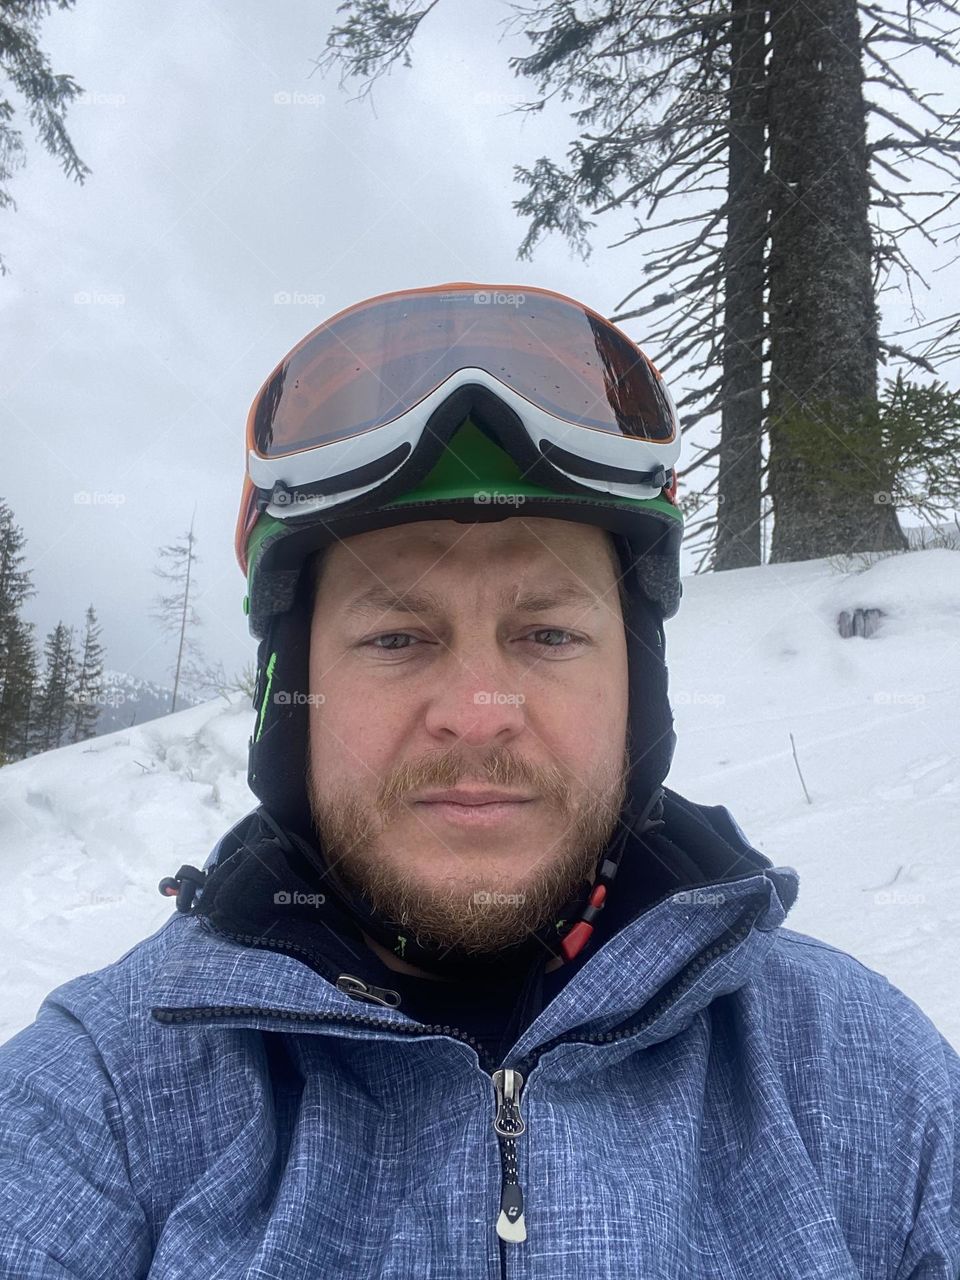 Snowboarding selfie 🤳